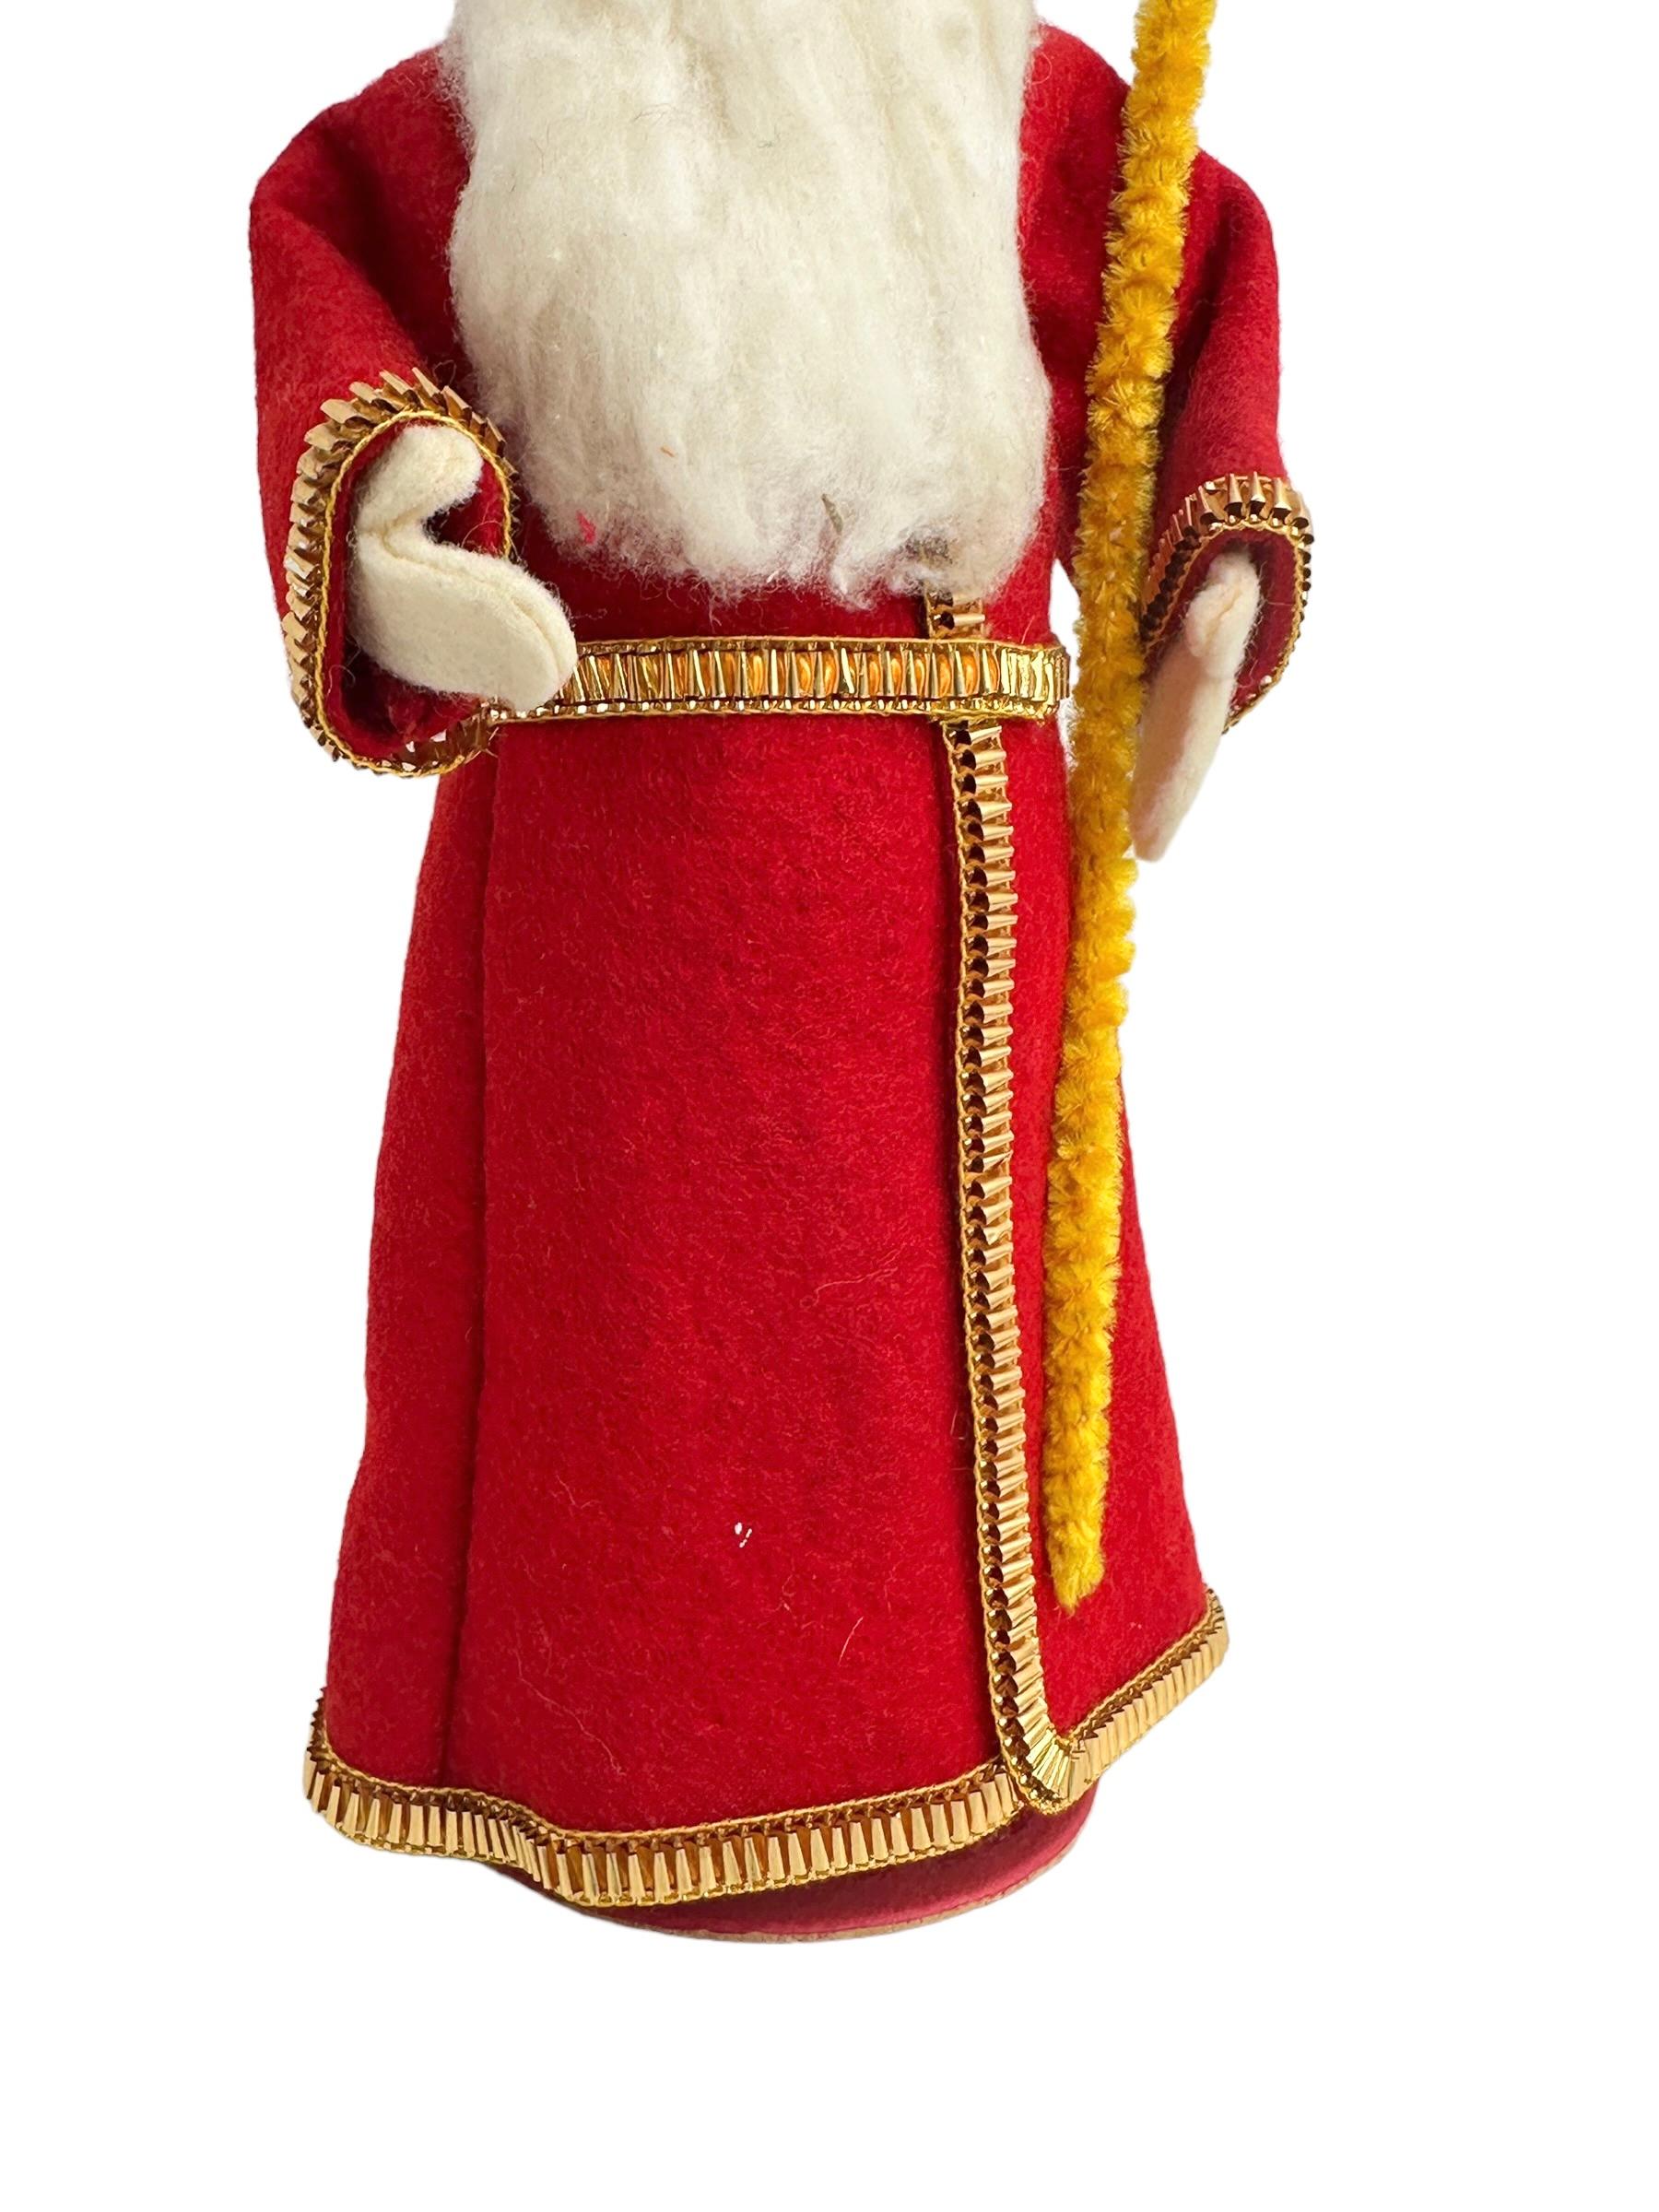 German Stunning Christmas Vintage St. Nikolaus Santa Claus Belsnickel Figure